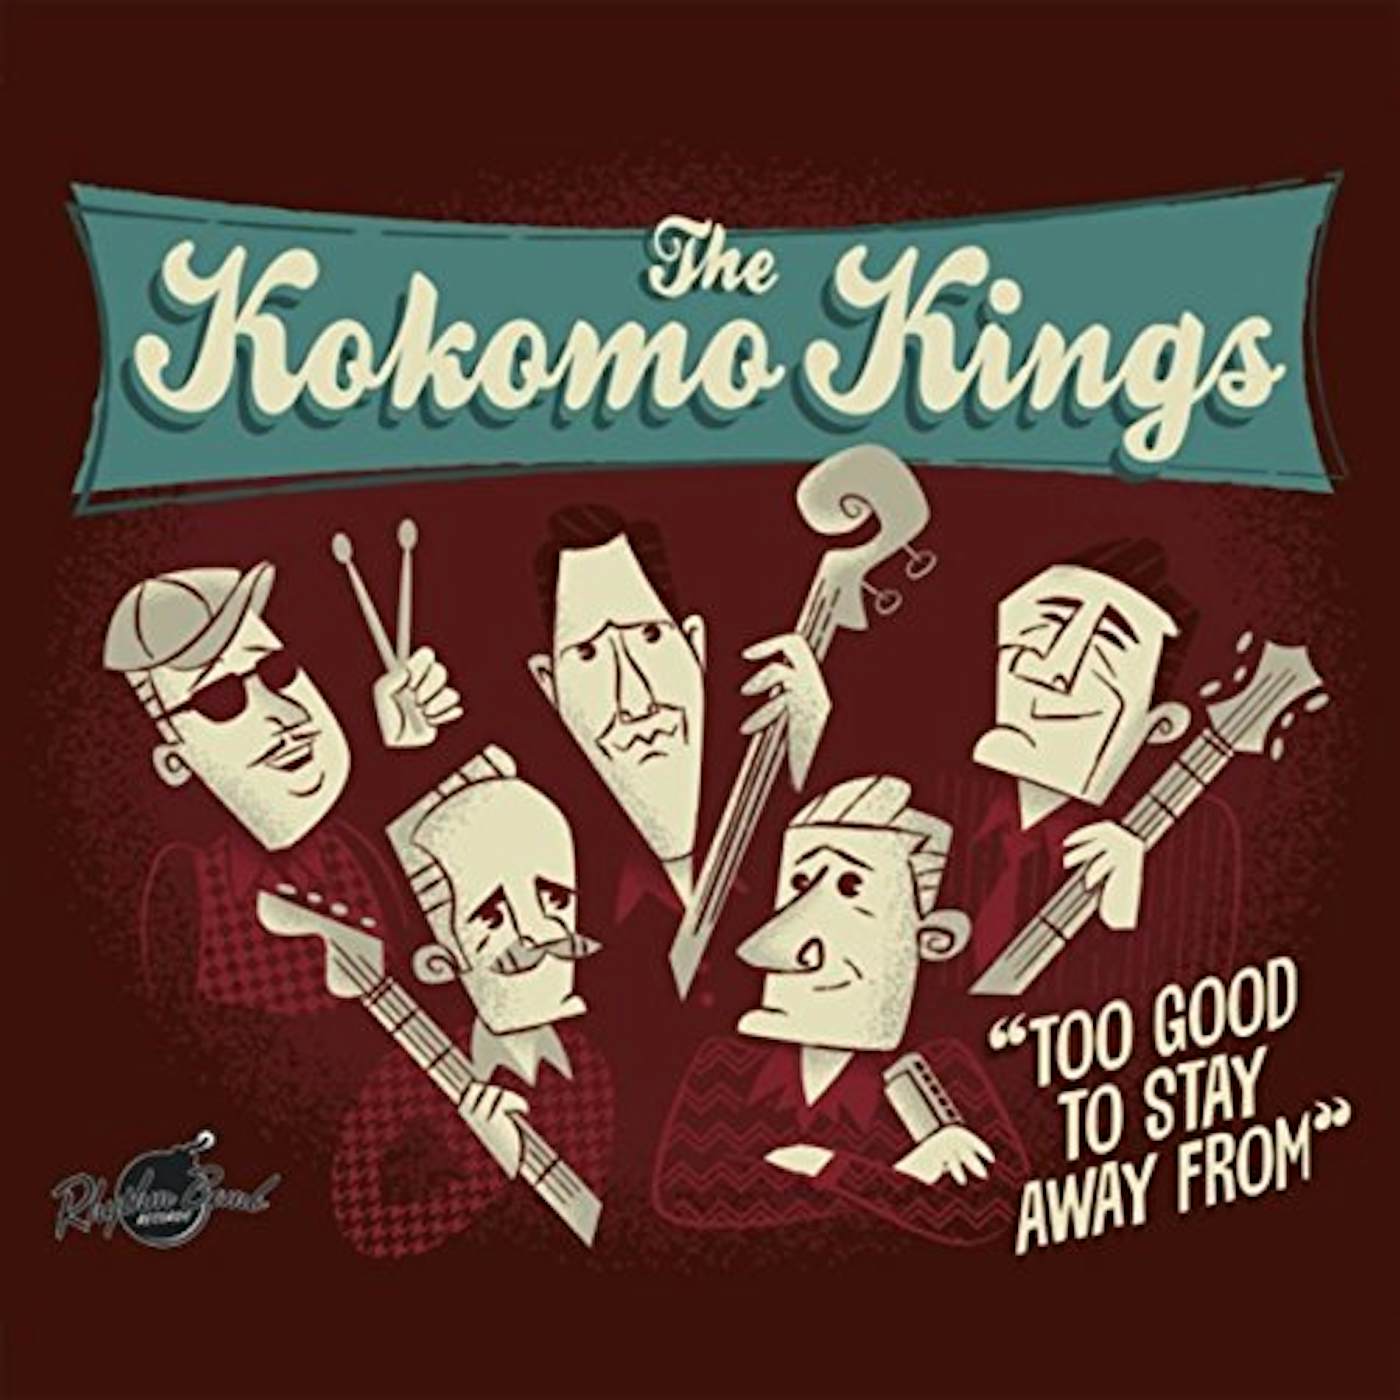 The Kokomo Kings TOO GOOD TO STAY AWAY FROM ROCK & POP CD